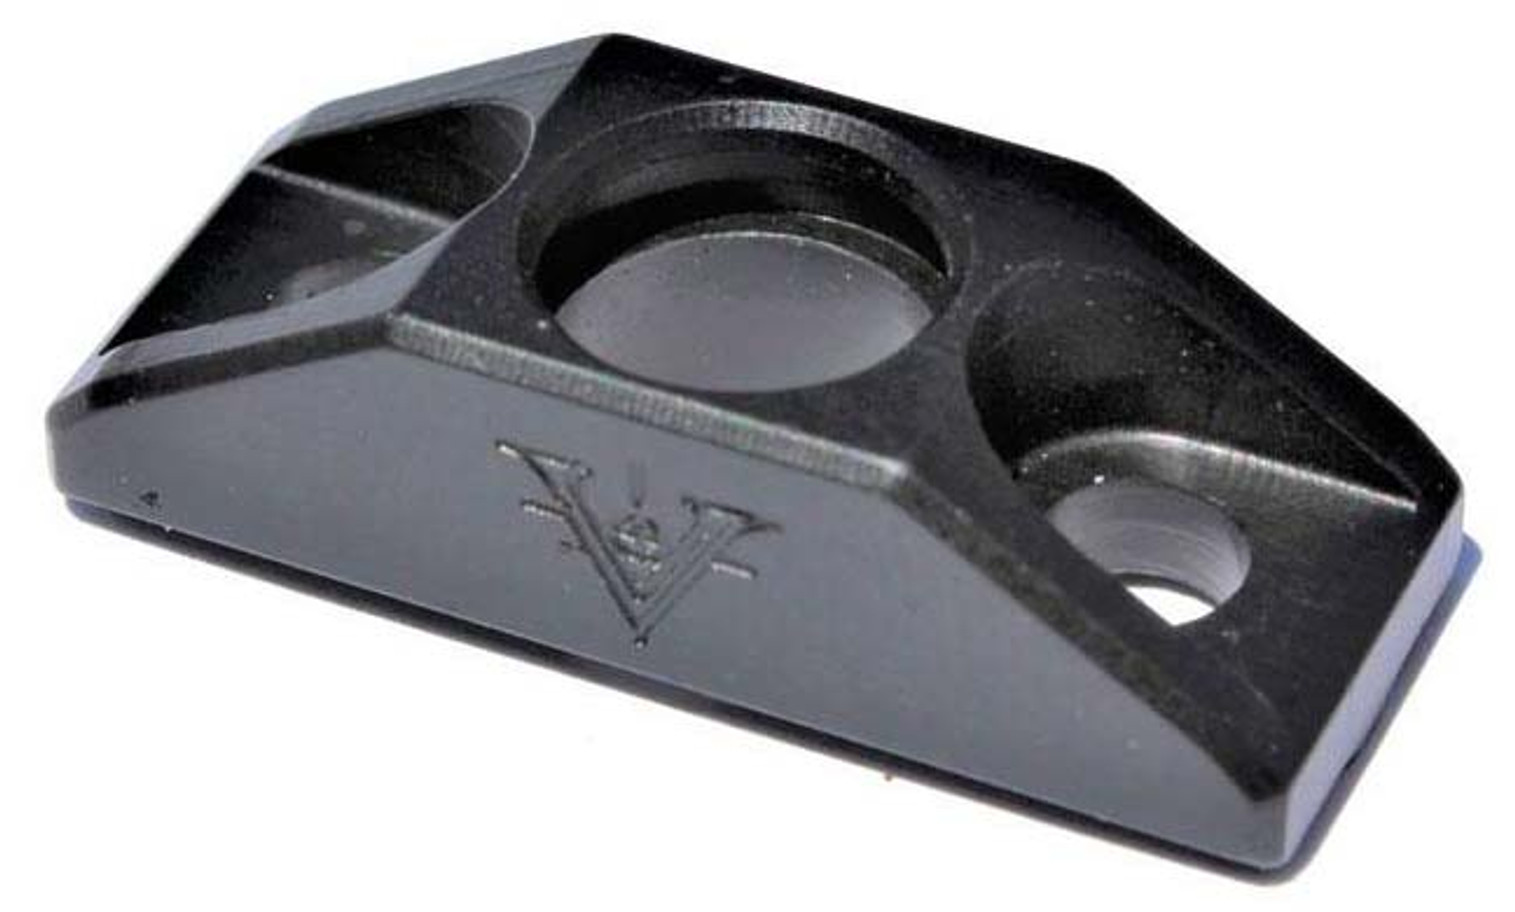 Vendetta Precision VP-21 CNC Aluminum Anti-Rotation QD Swivel Socket